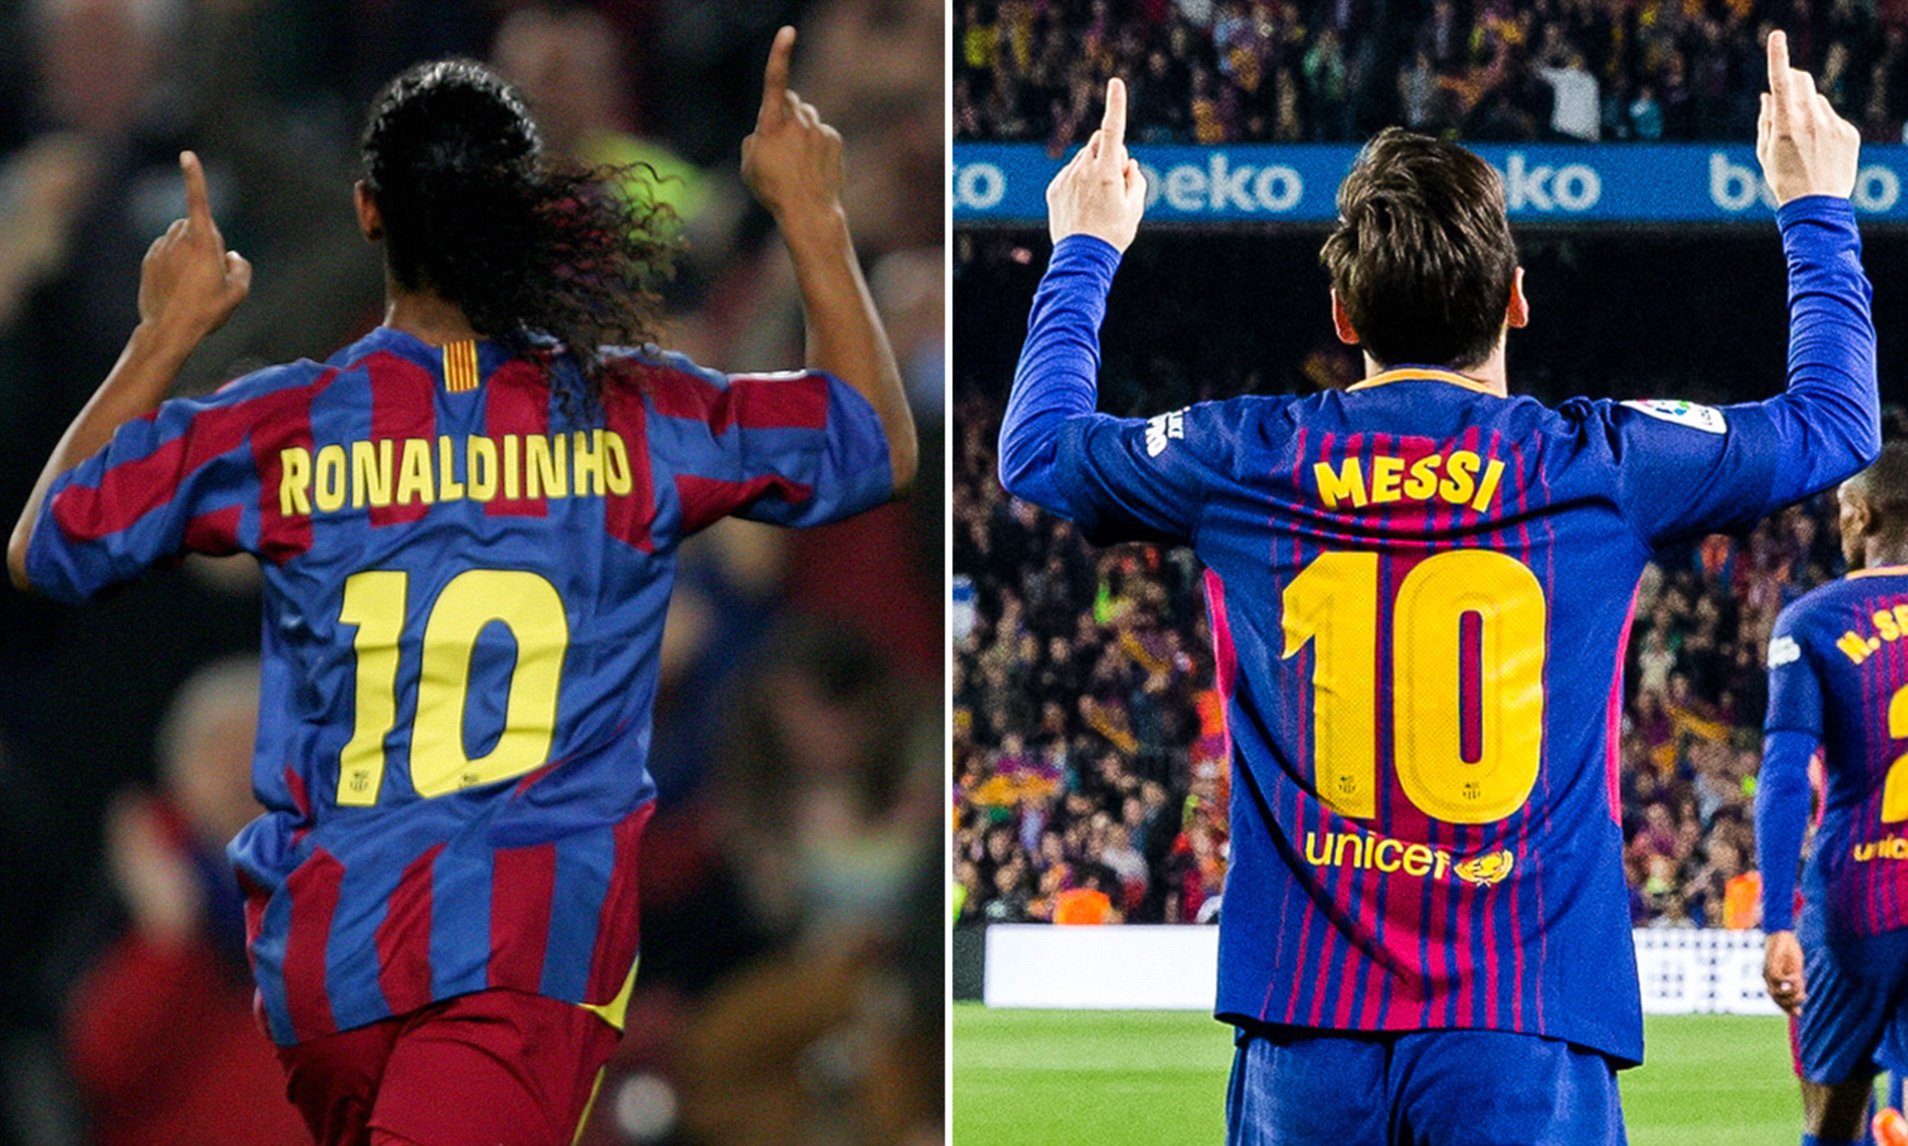 Why Messi’s No 10 Barca Shirt Should Be Retired – Ronaldinho